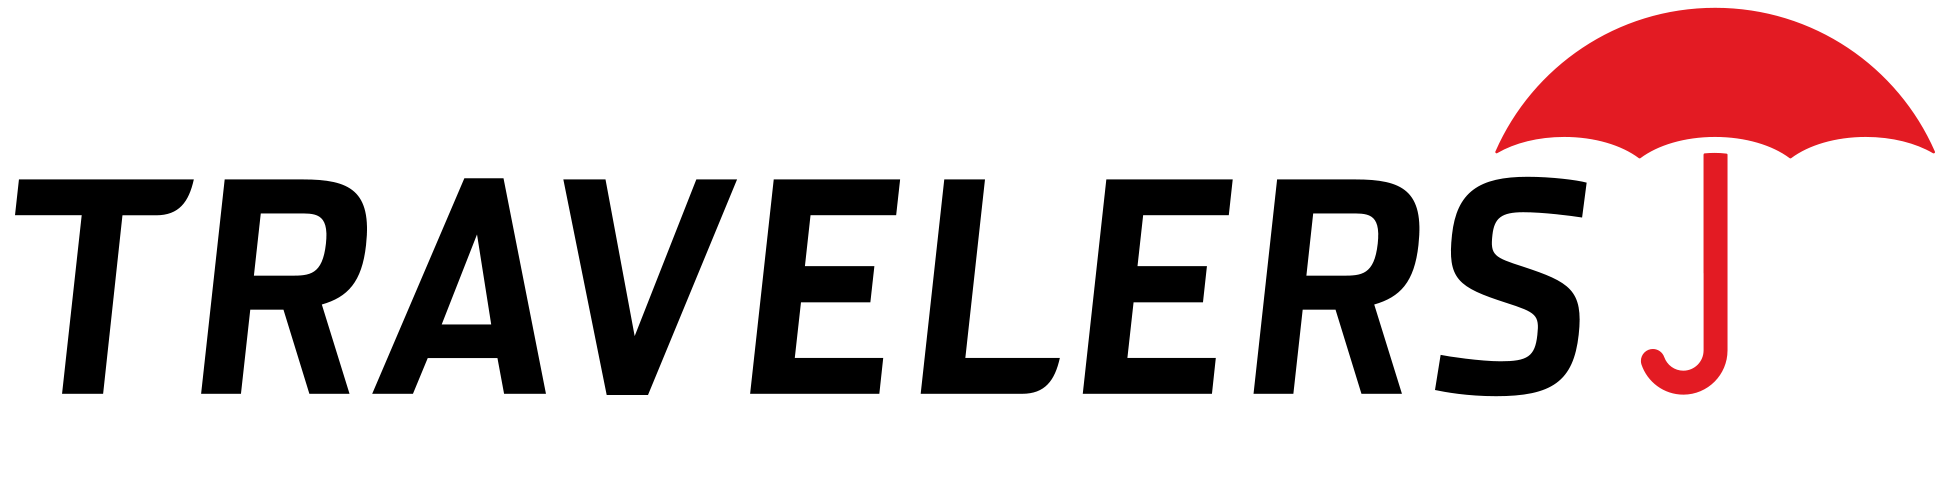 travelers-logo